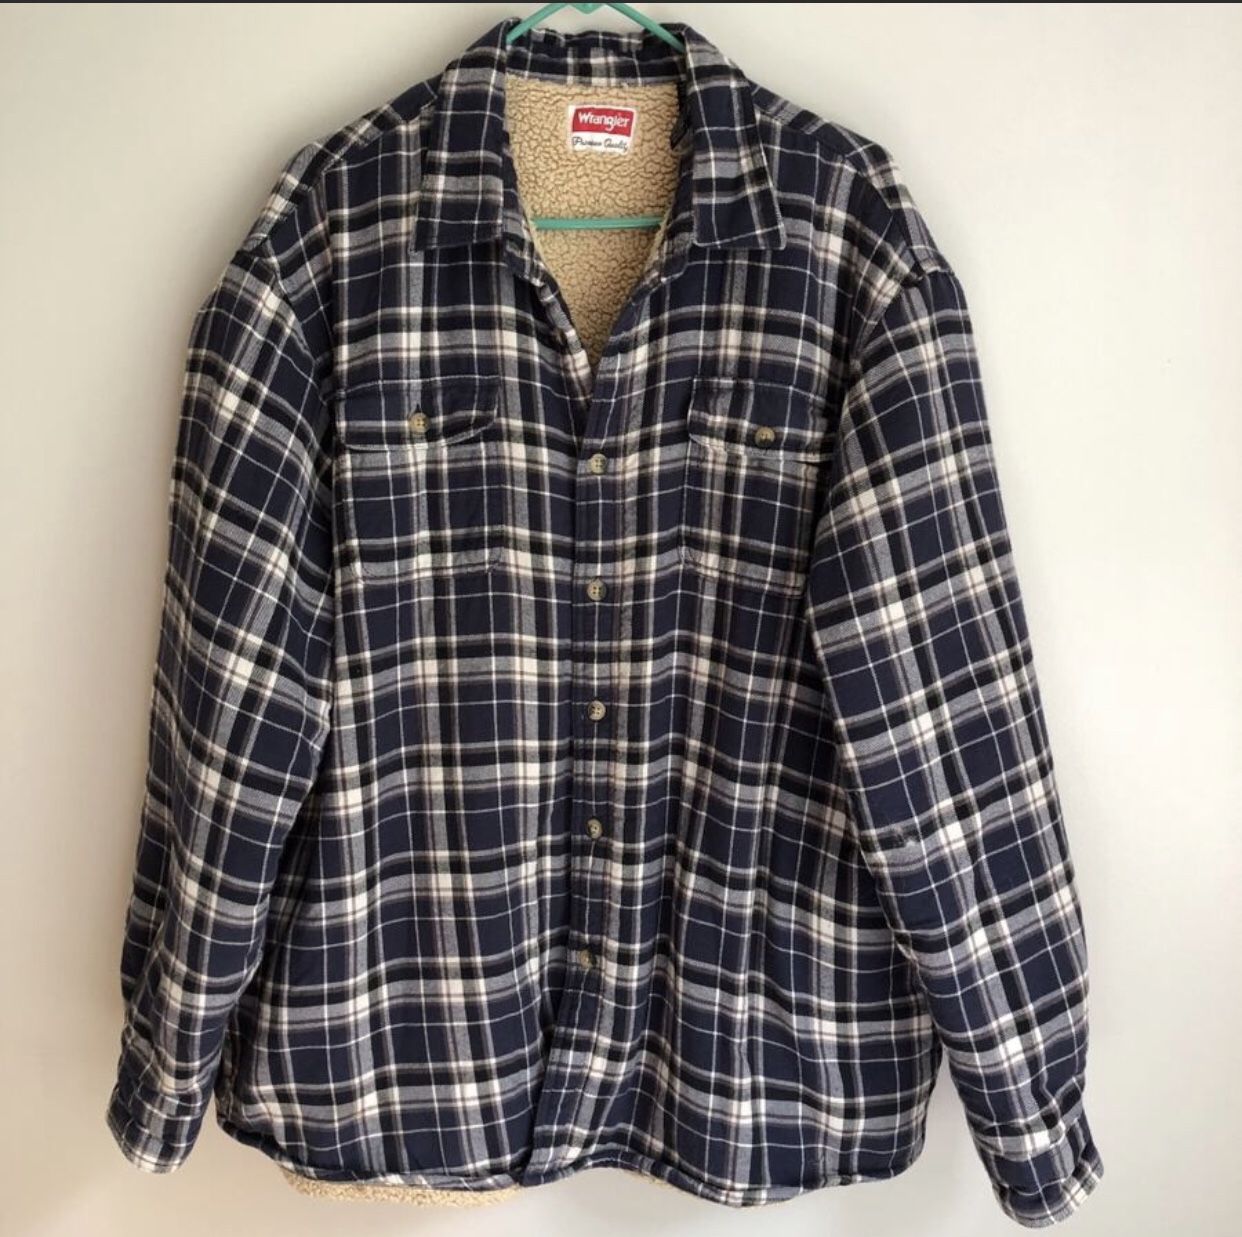 Wrangler Authentics Men’s Long Sleeve Sherpa Lined Flannel Work Shirt Jacket Size 2XL